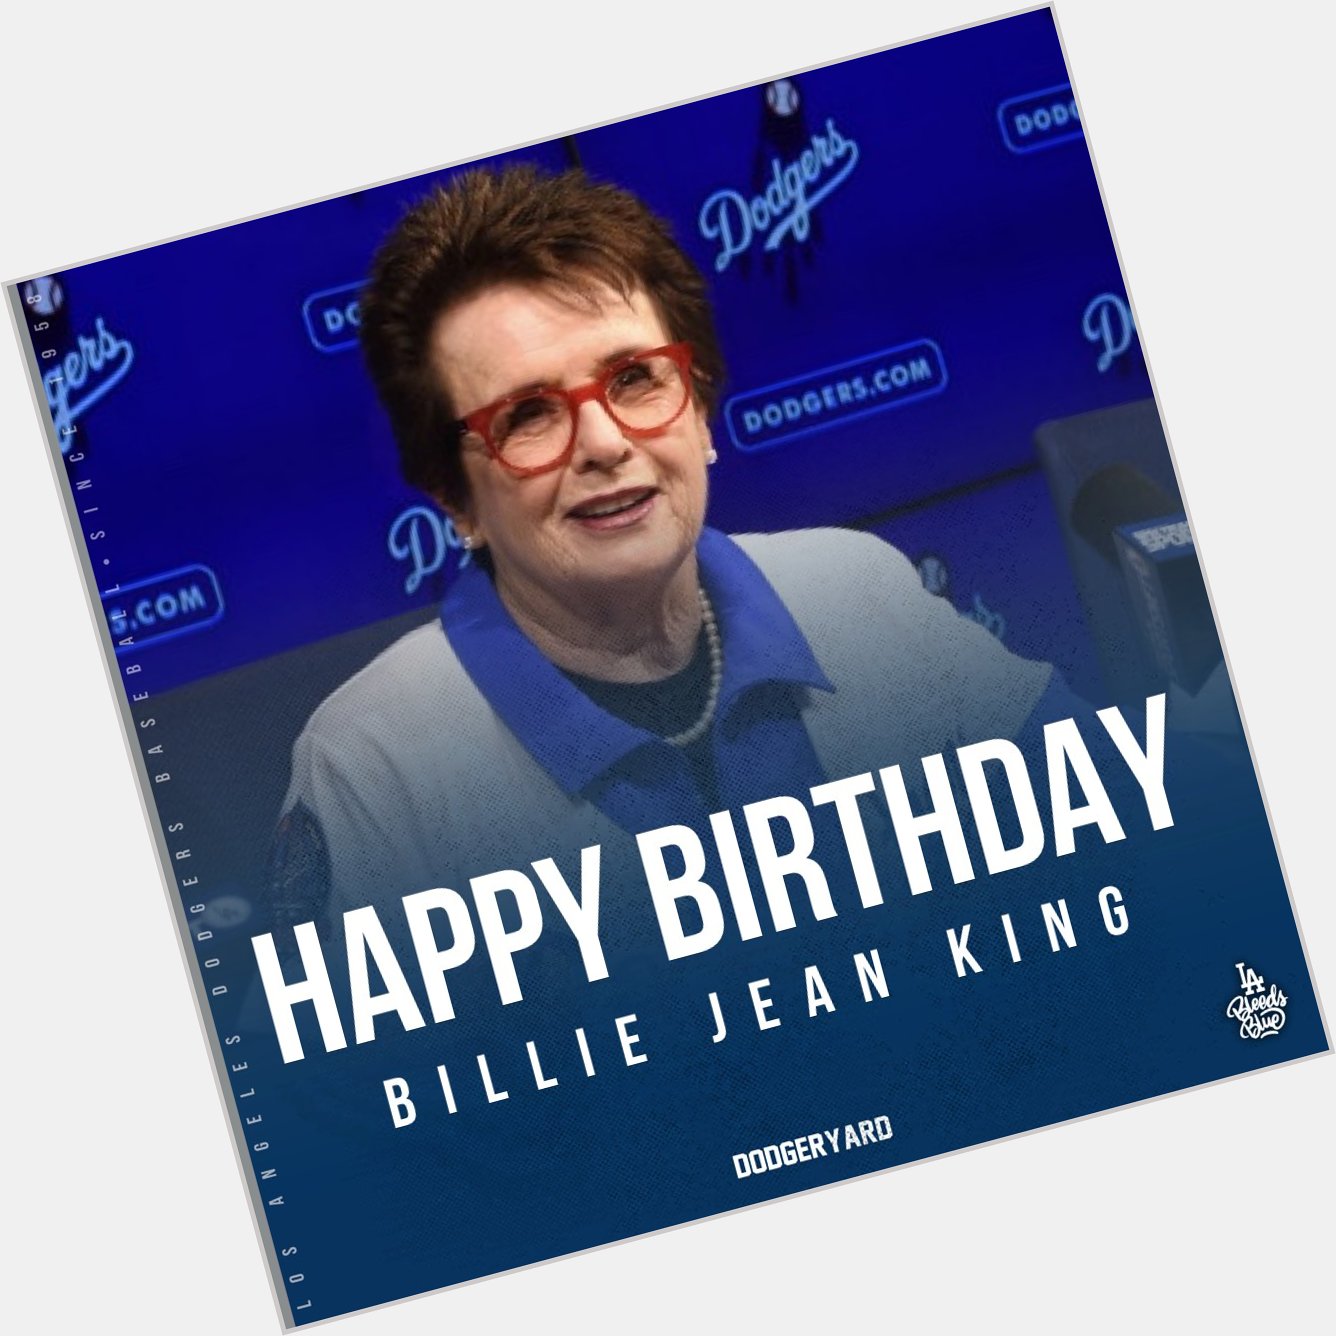 Happy birthday, Billie Jean King! 